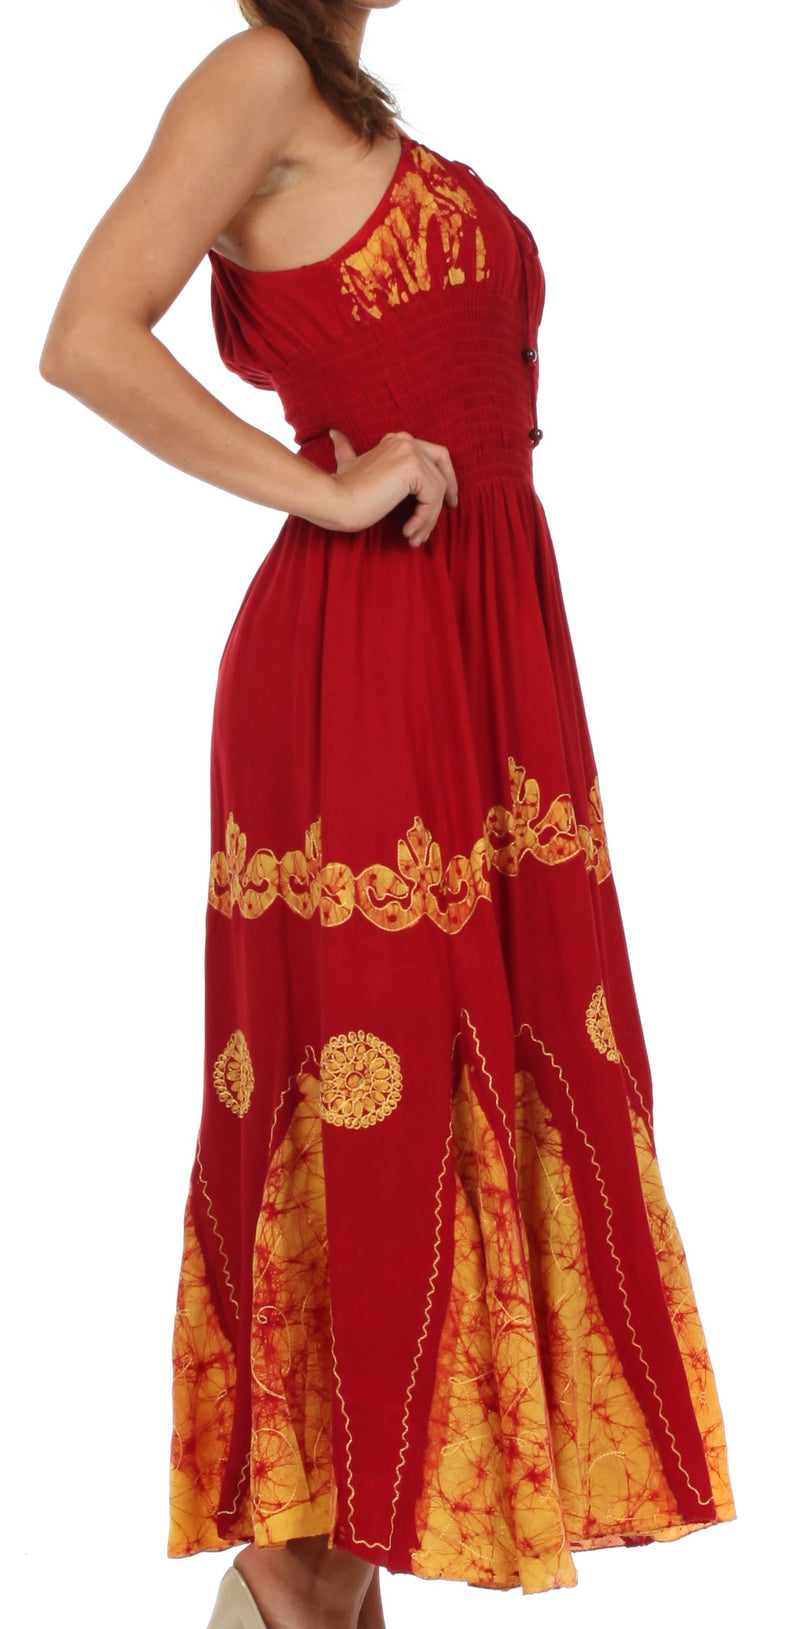 Sakkas Batik Triangle Smocked Empire Waist Dress